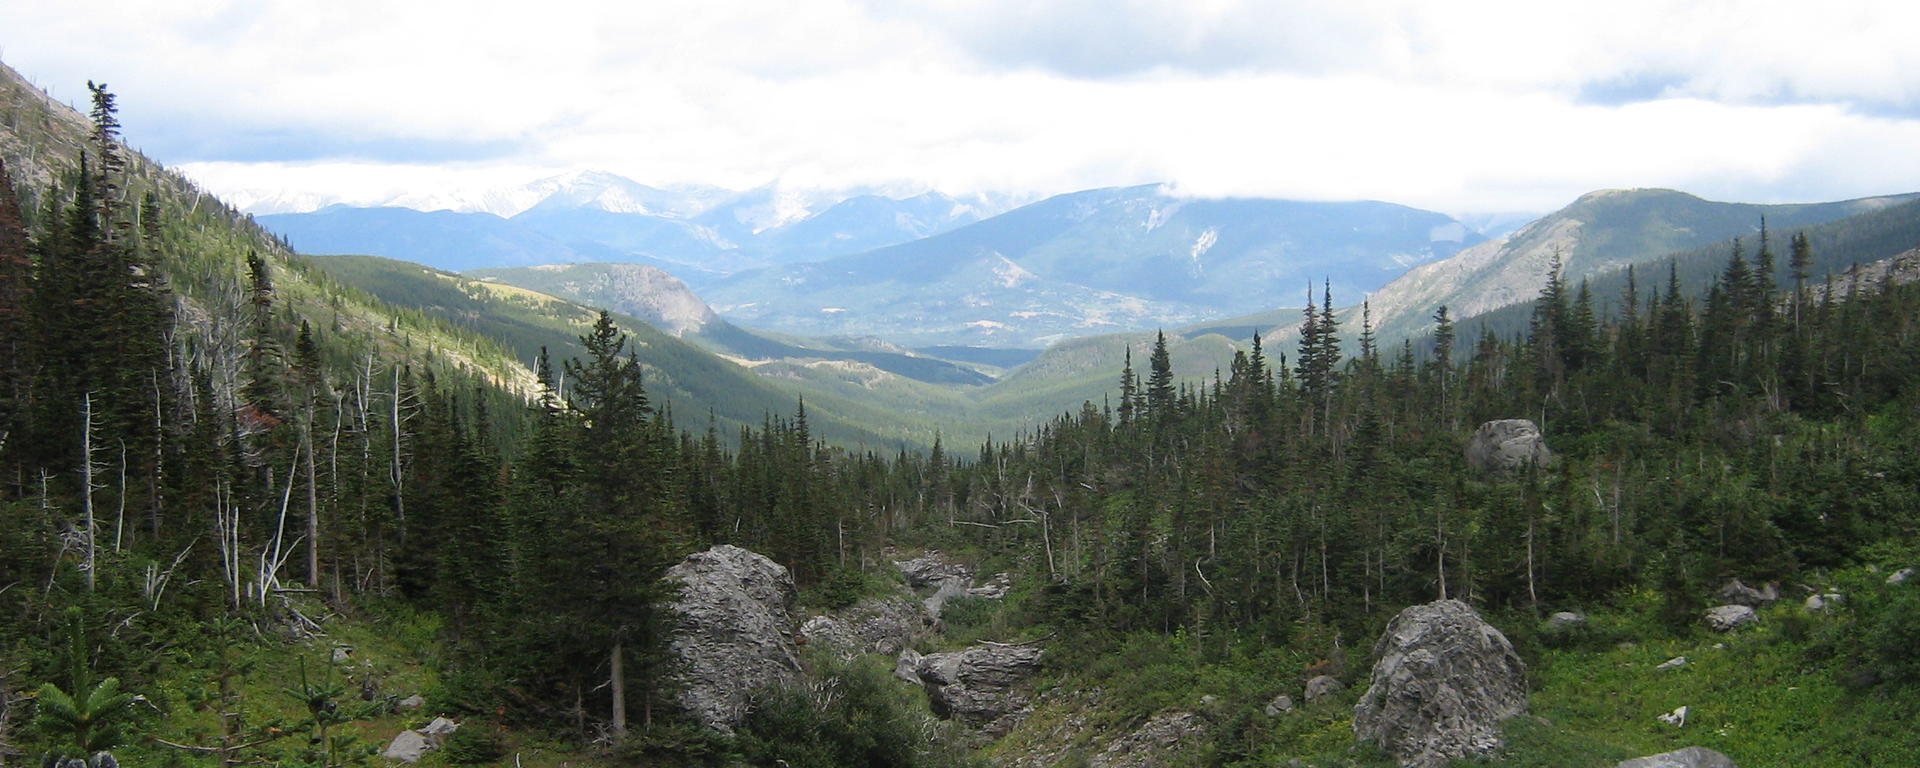 A beautiful mountain landscape in Crowsnest Pass, Alberta